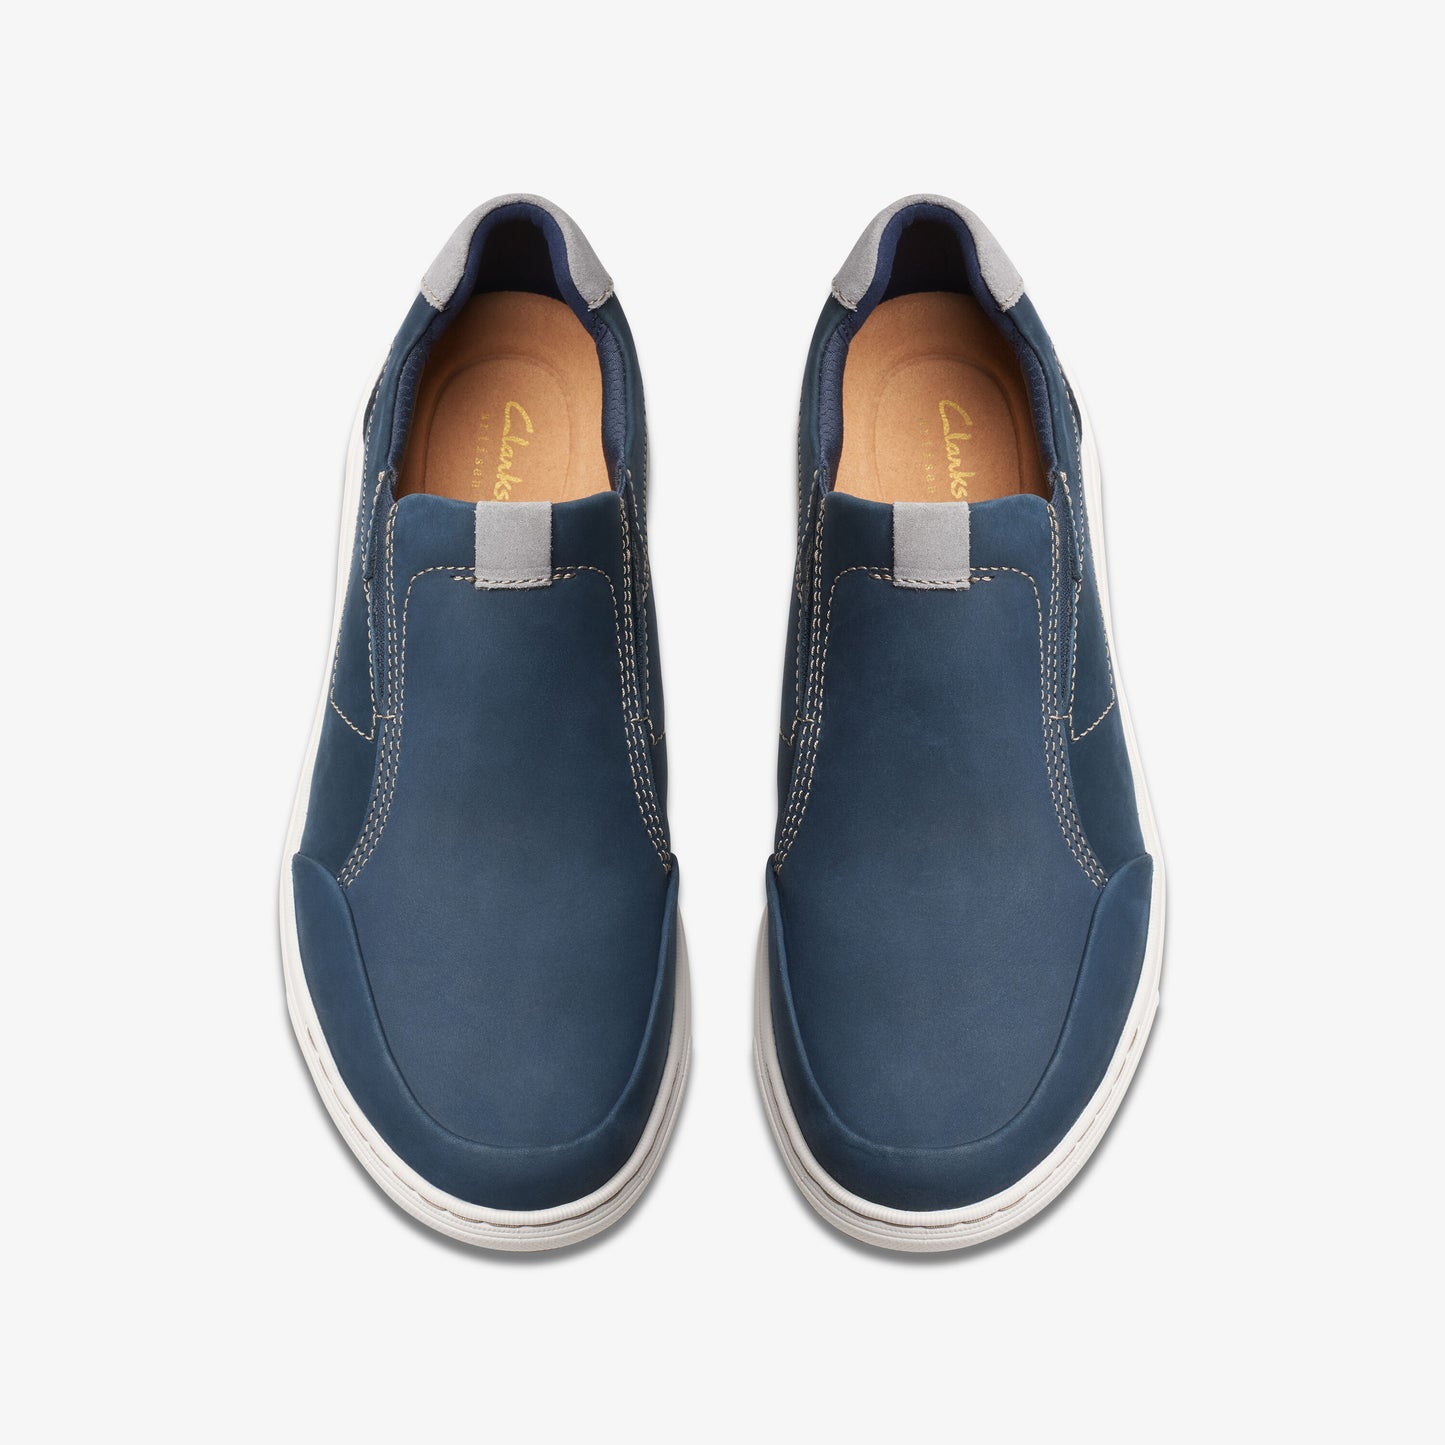 CLARKS | पुरुषों के लिए आकस्मिक जूते | MAPSTONE STEP NAVY NUBUCK | नीला